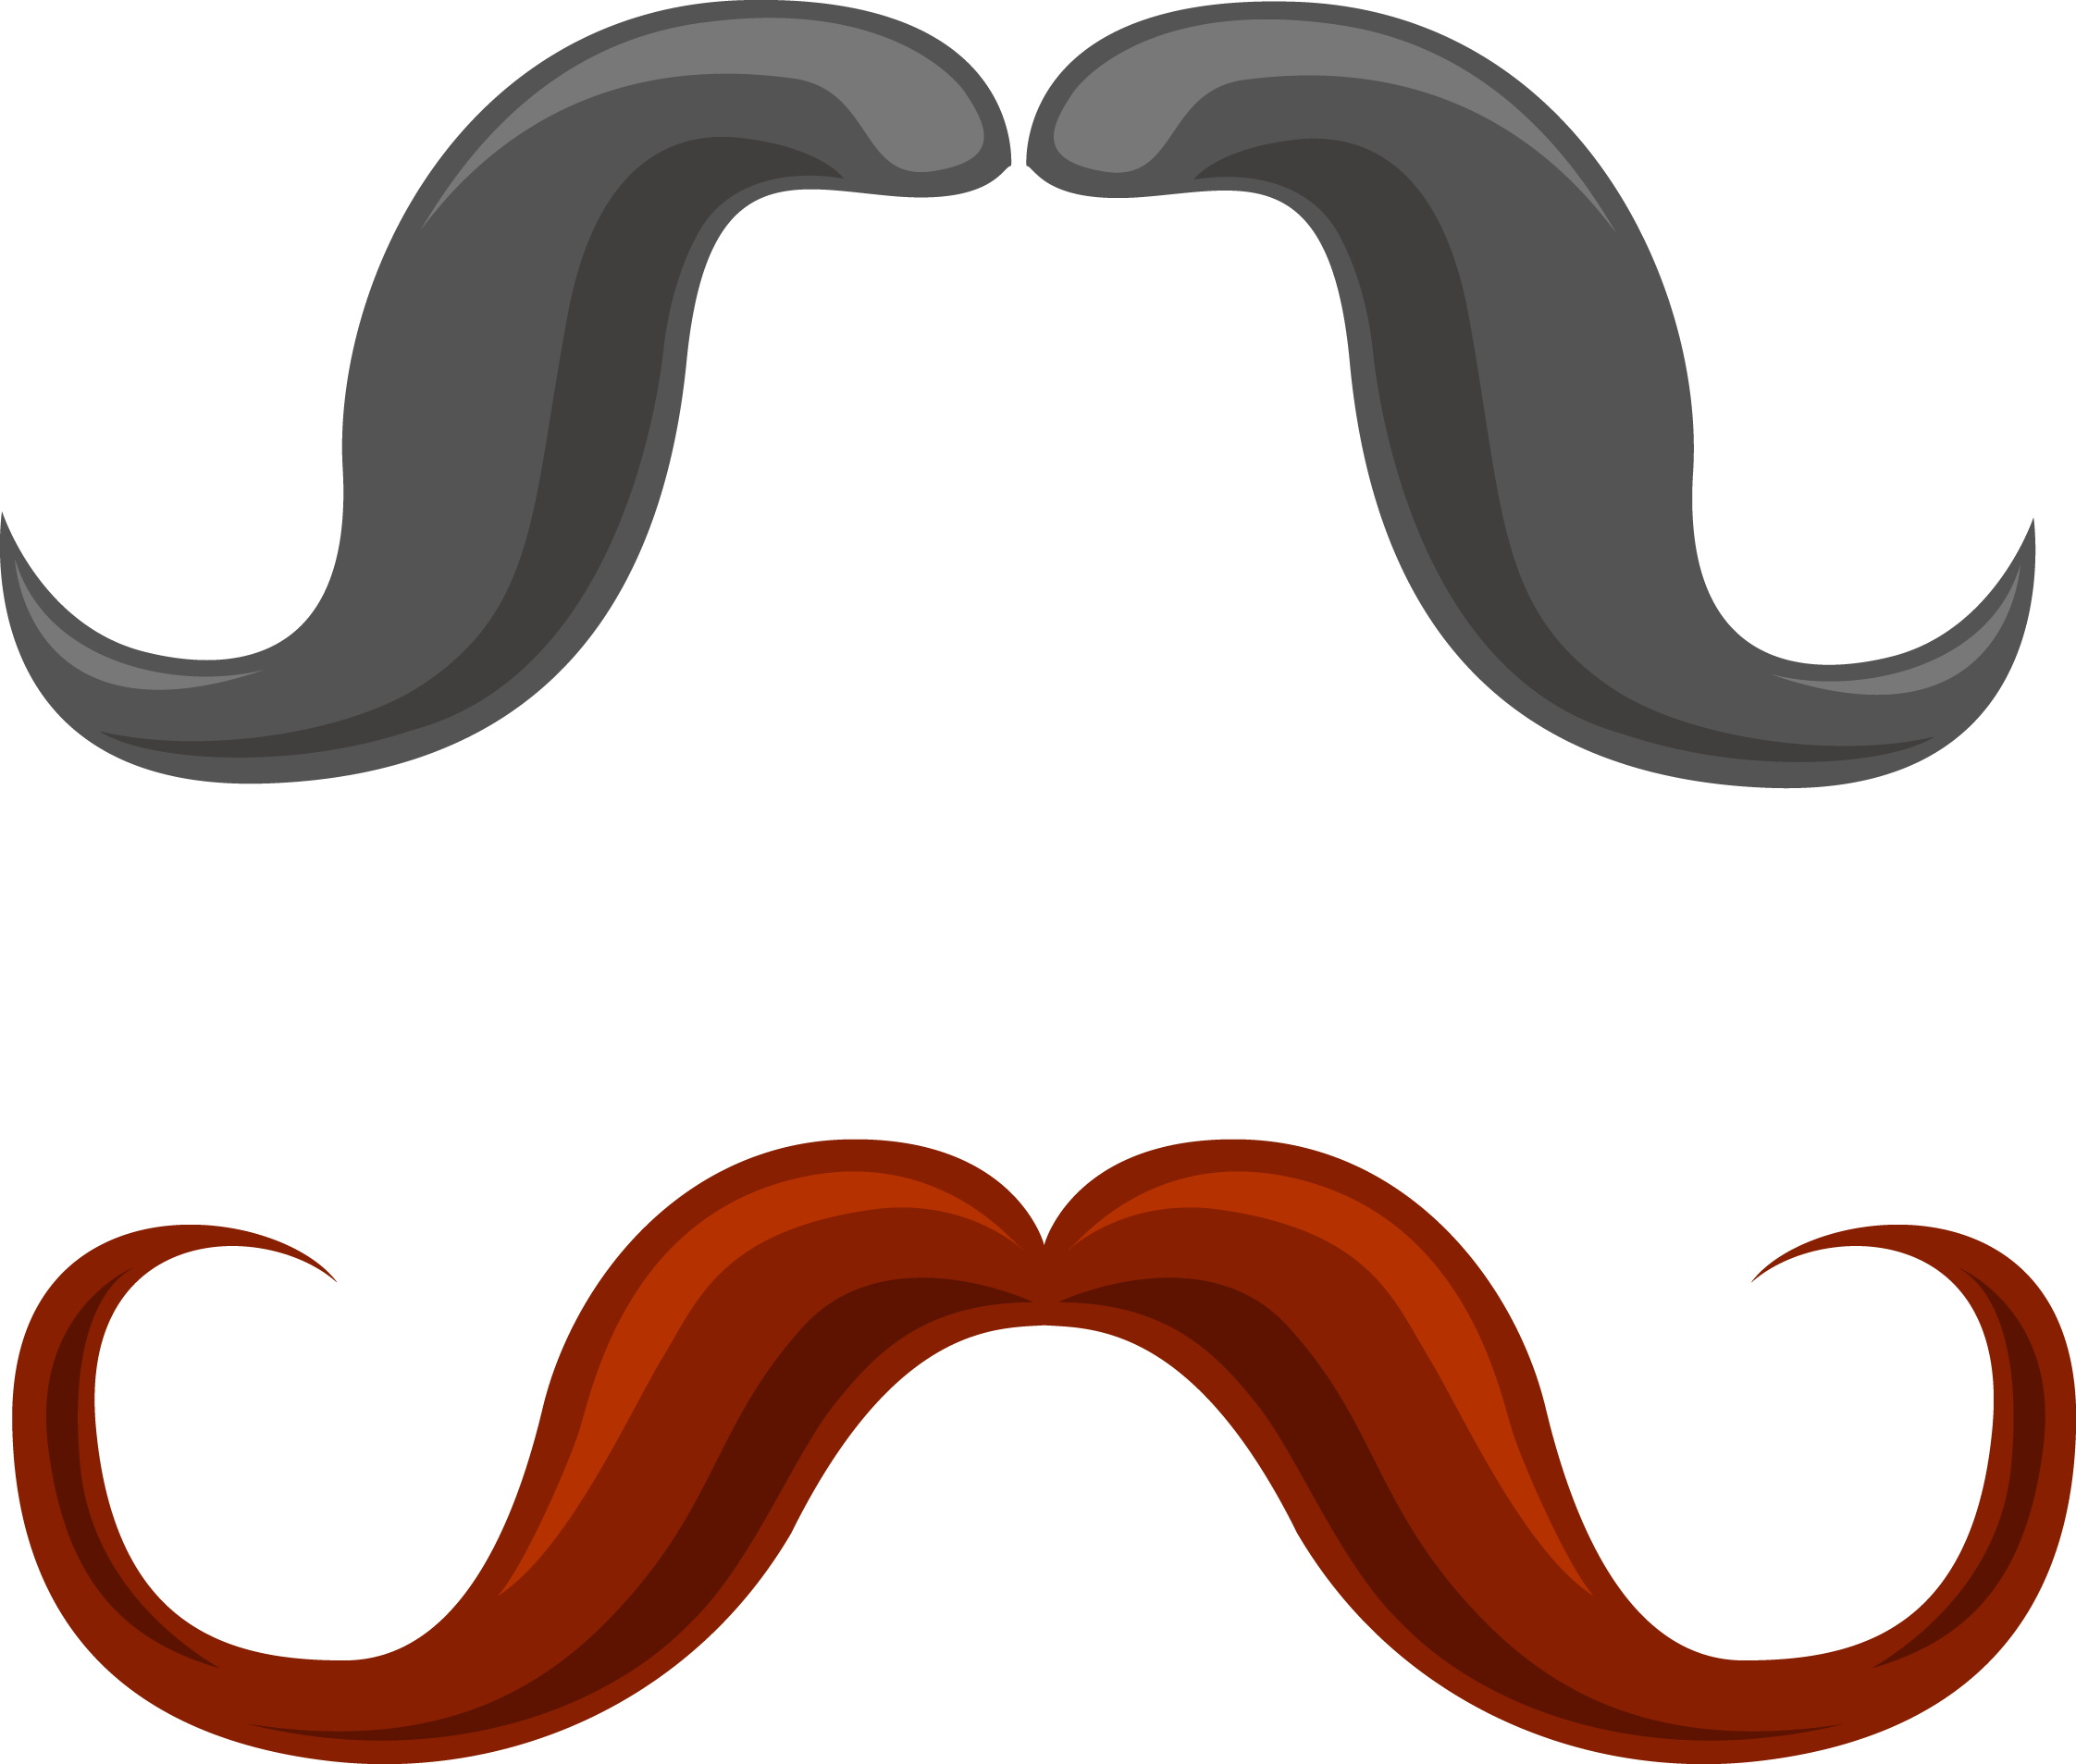 Moustache clipart orange. Beard man clip art